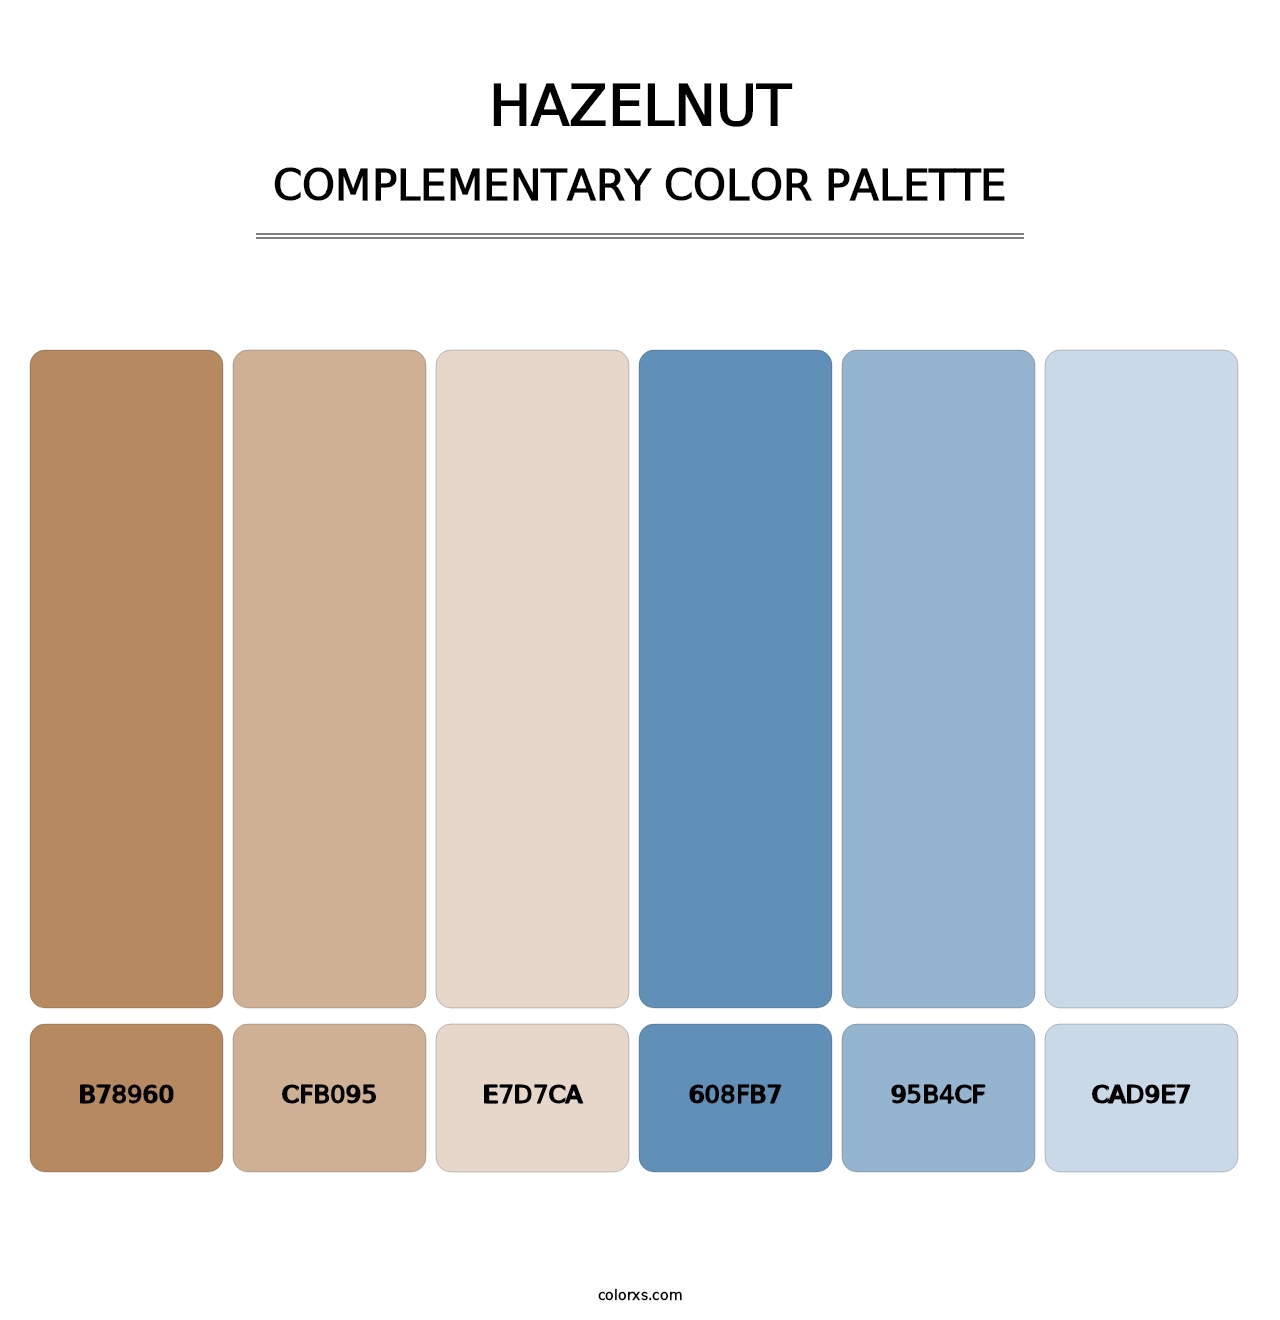 Hazelnut - Complementary Color Palette